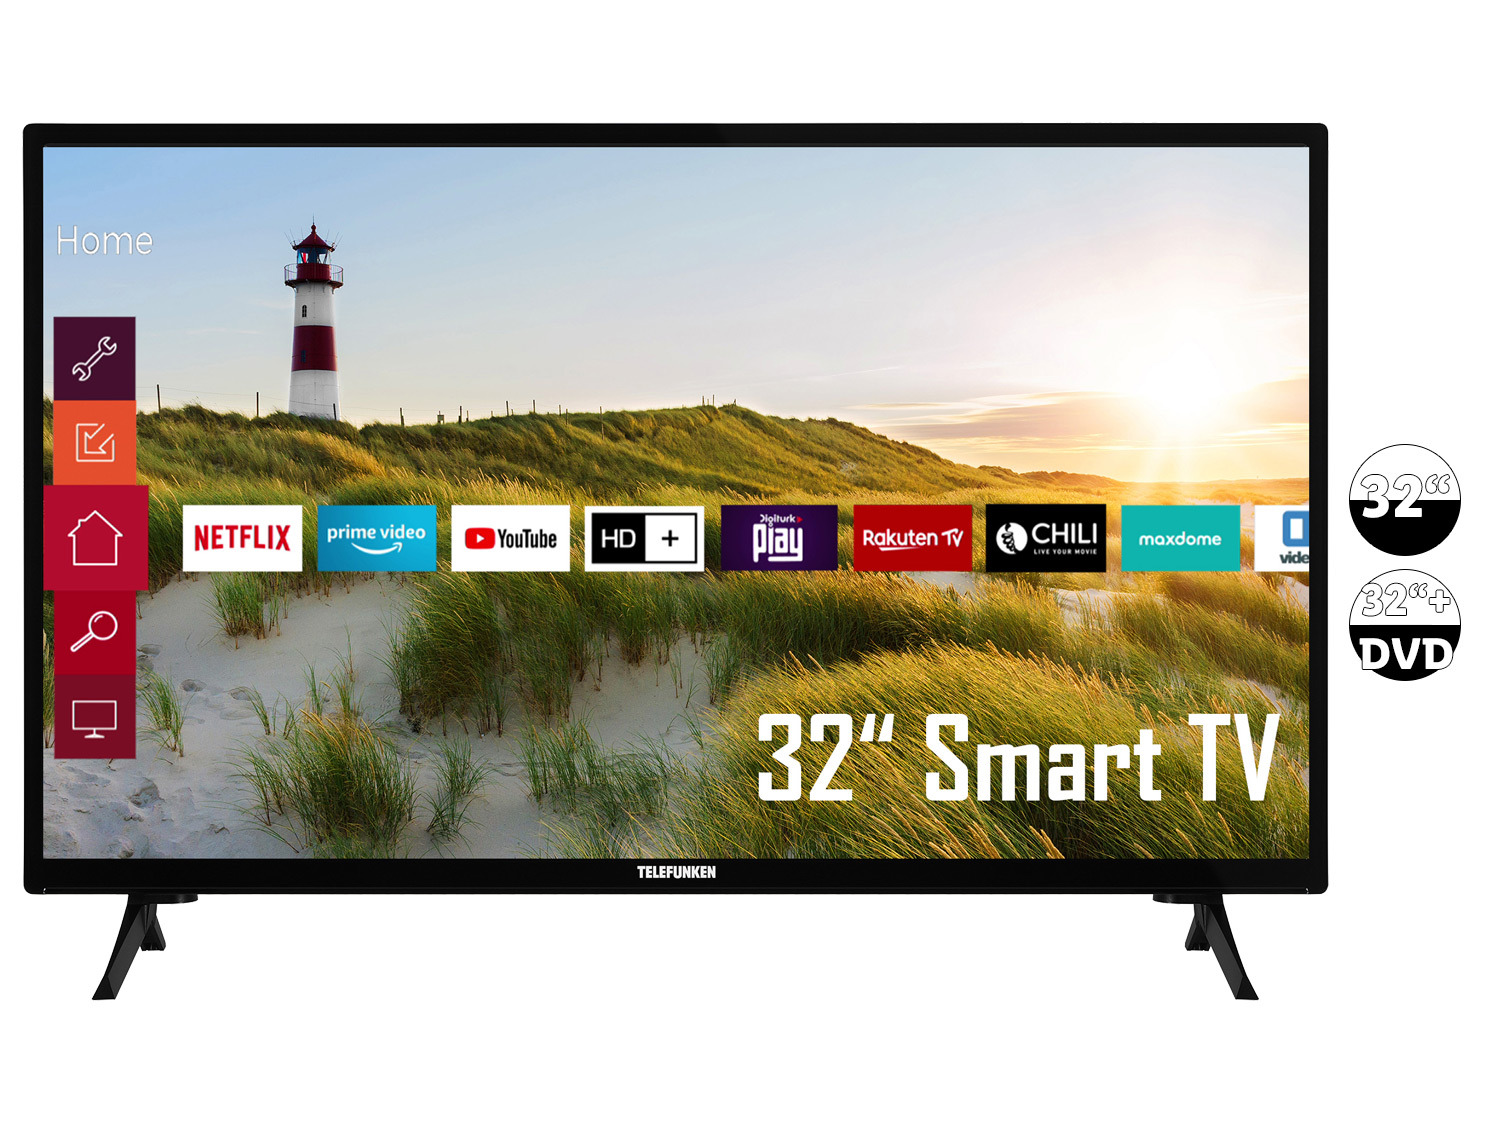 TELEFUNKEN Fernseher HD Smart TV  Works with Alexa OK Google  große Auswahl an Apps